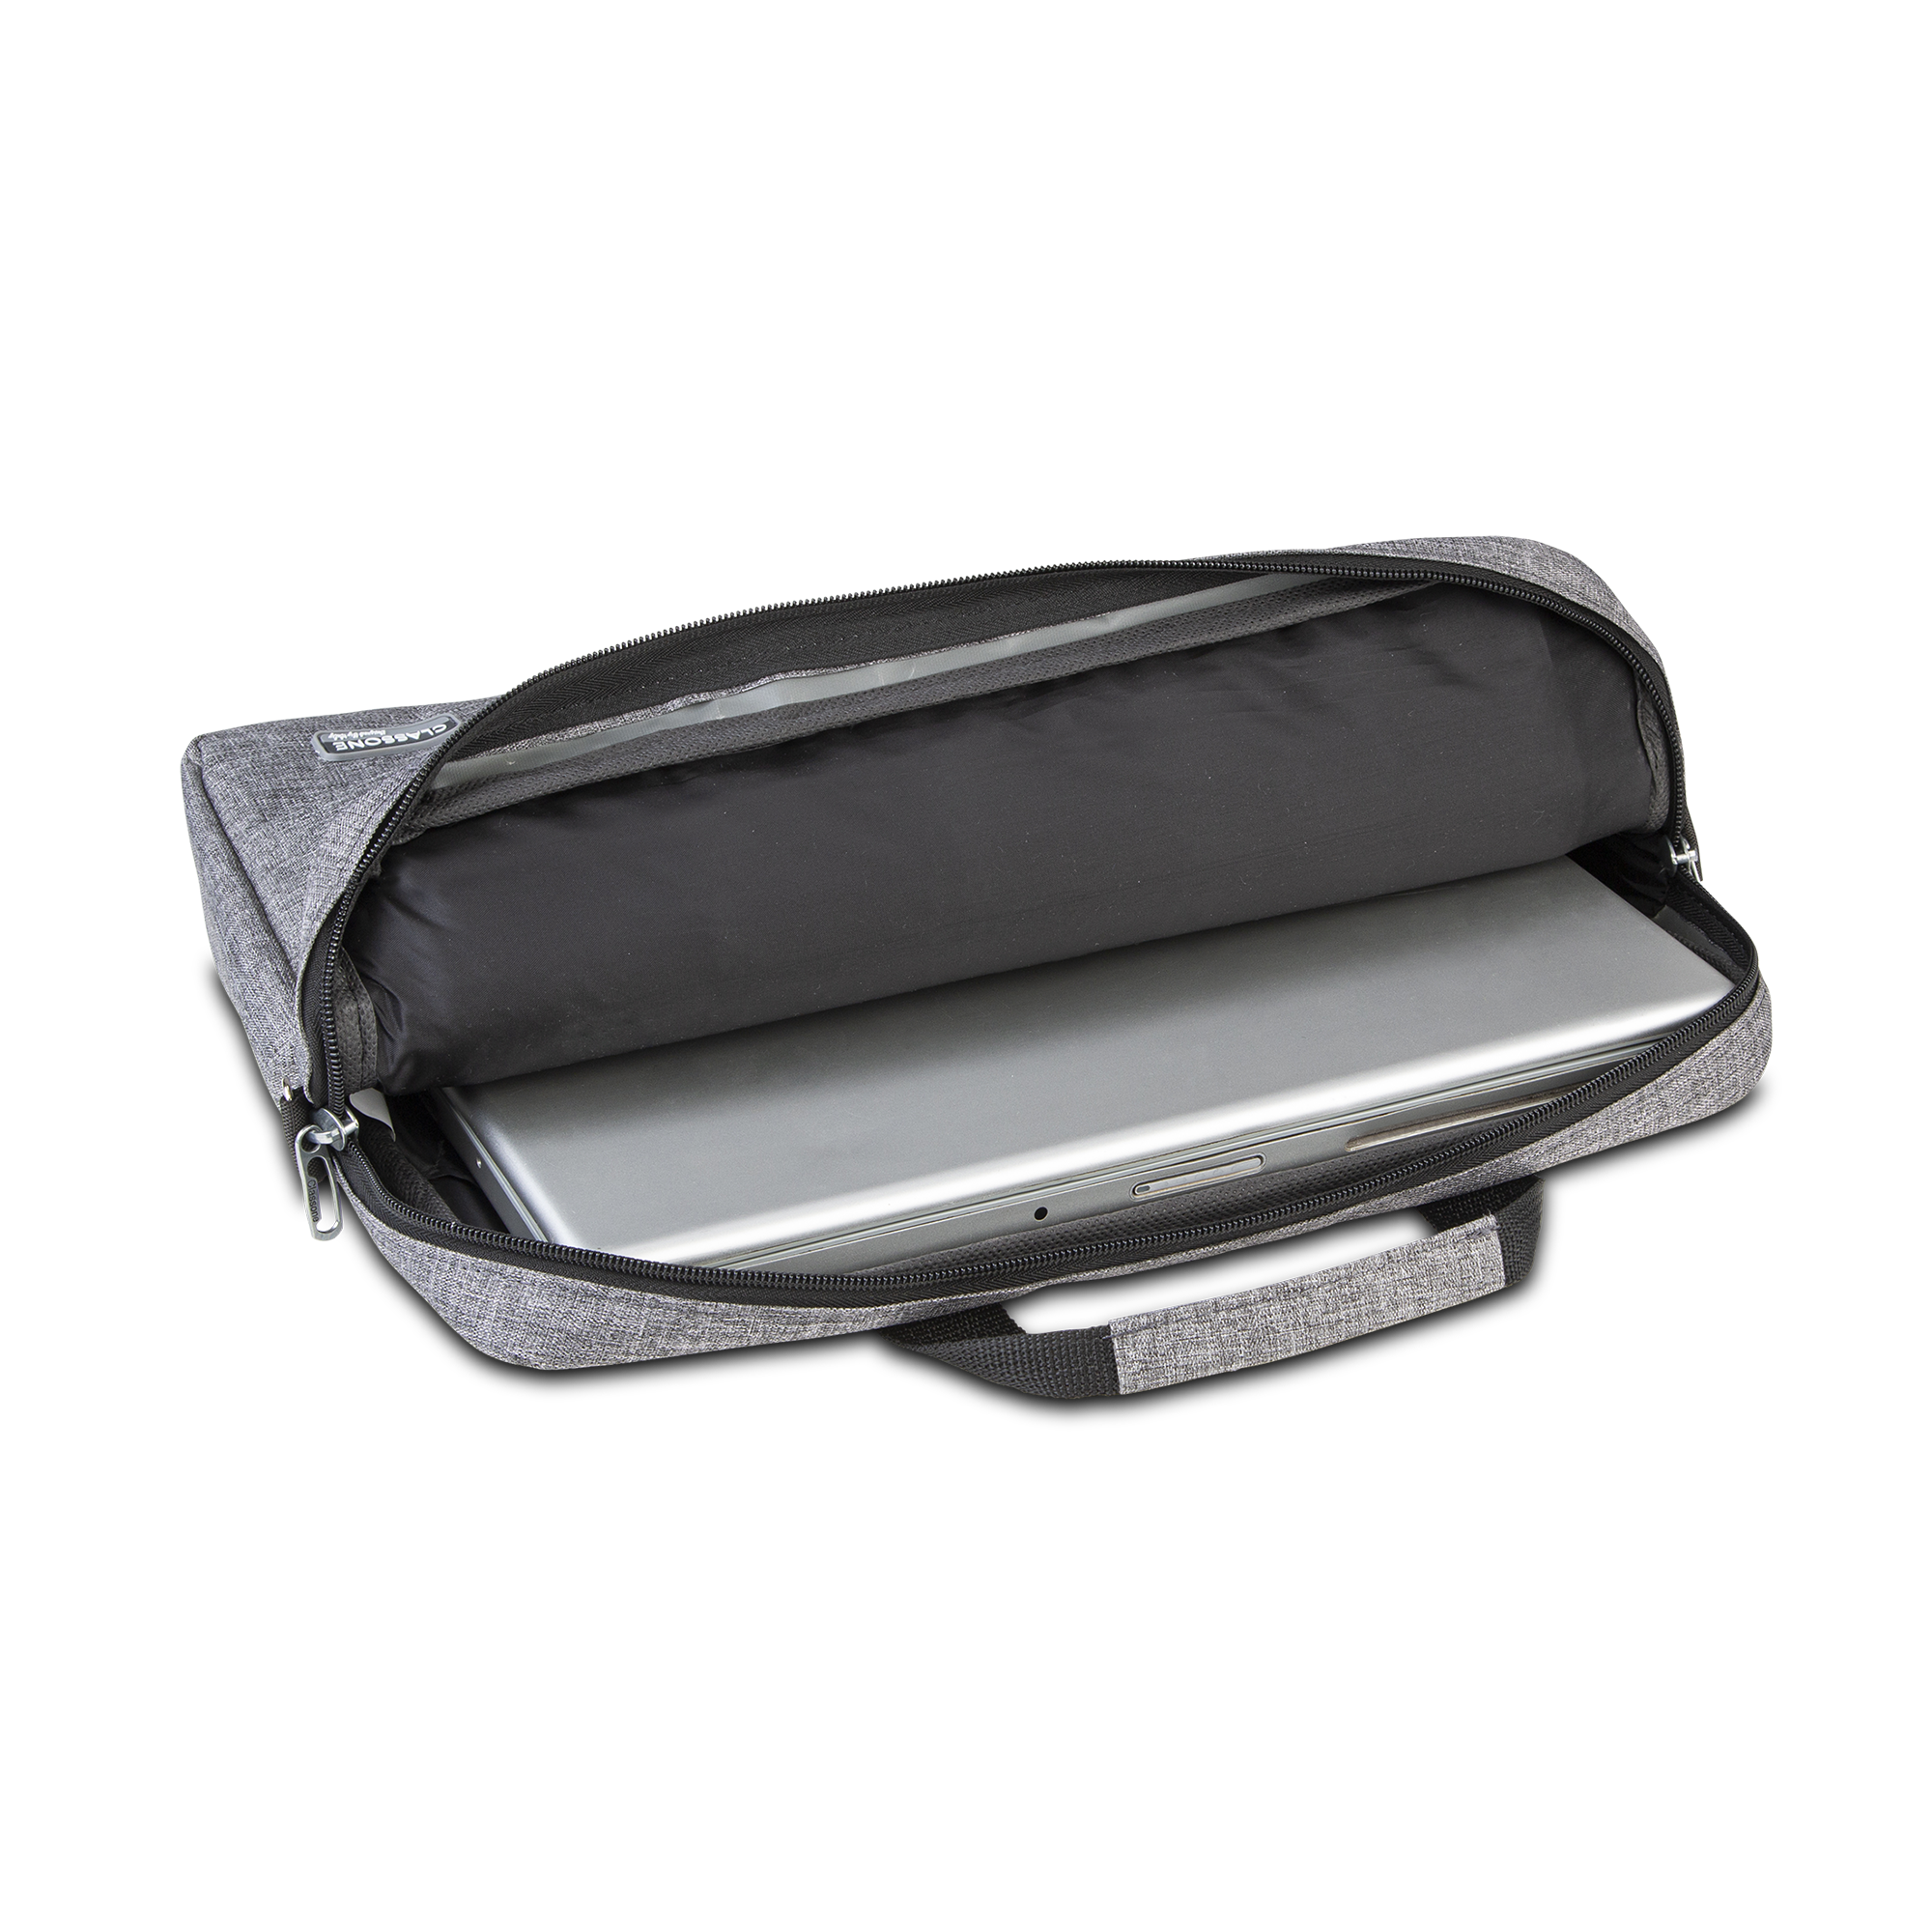 Classone Romeo Series TL2004 WTXpro Waterproof Fabric 15.6 Laptop Bag – Grey